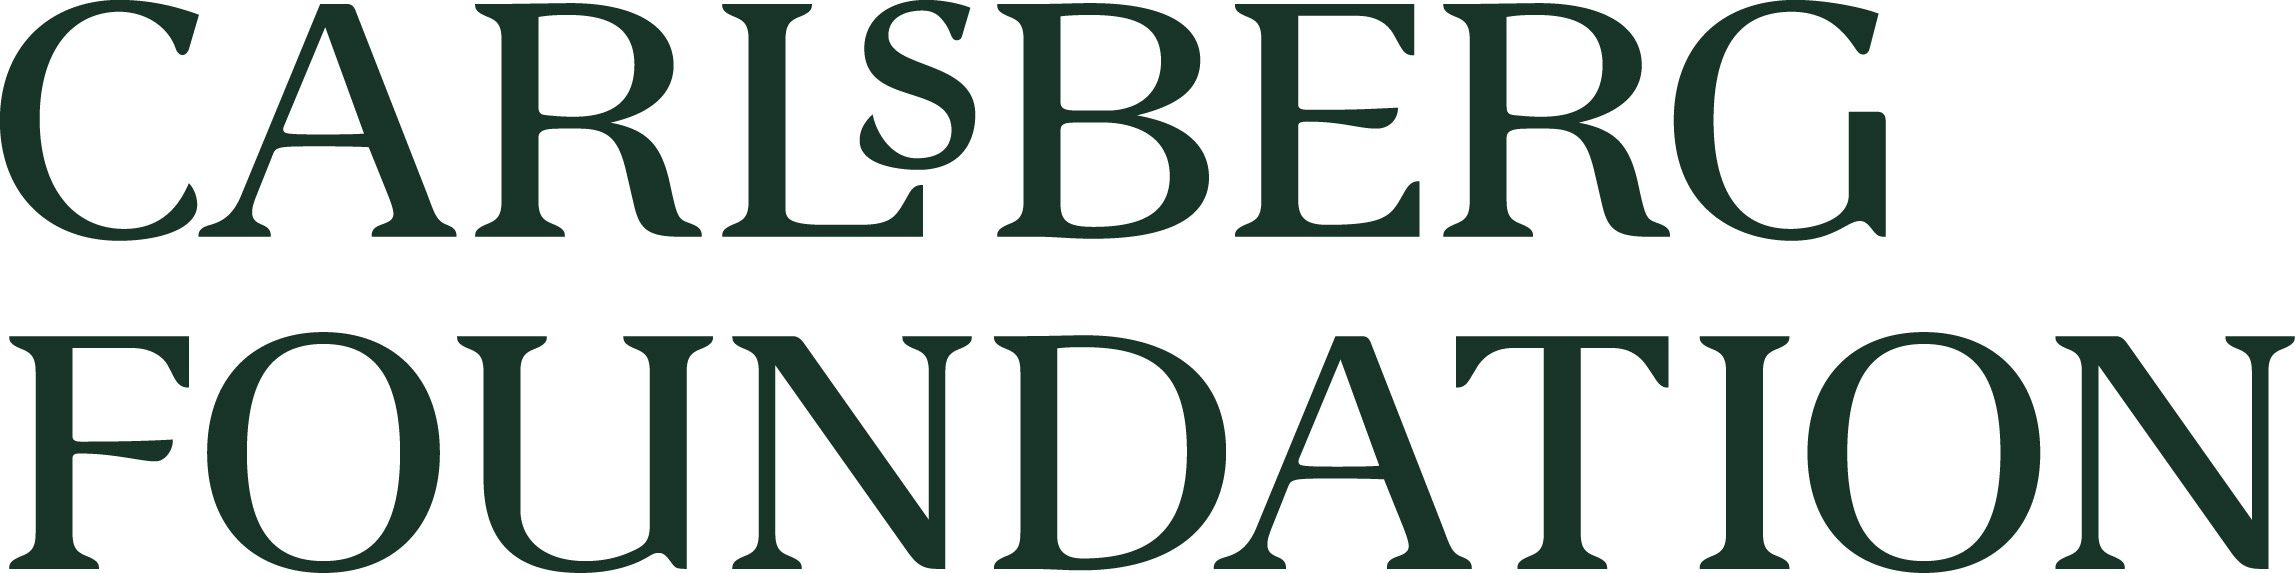 Carlsberg foundation logo